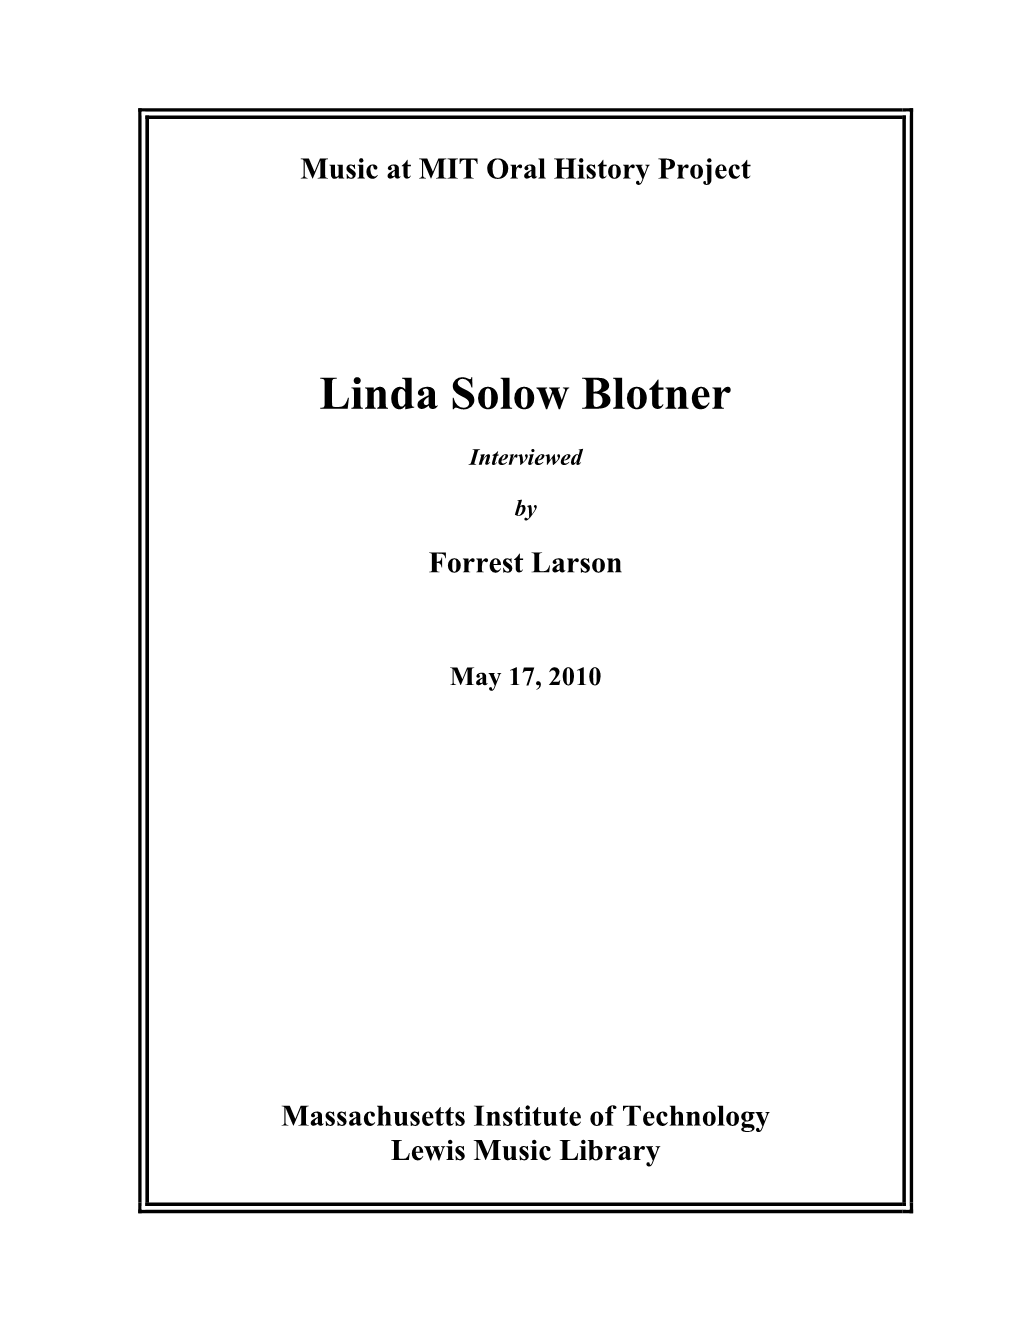 Linda Solow Blotner